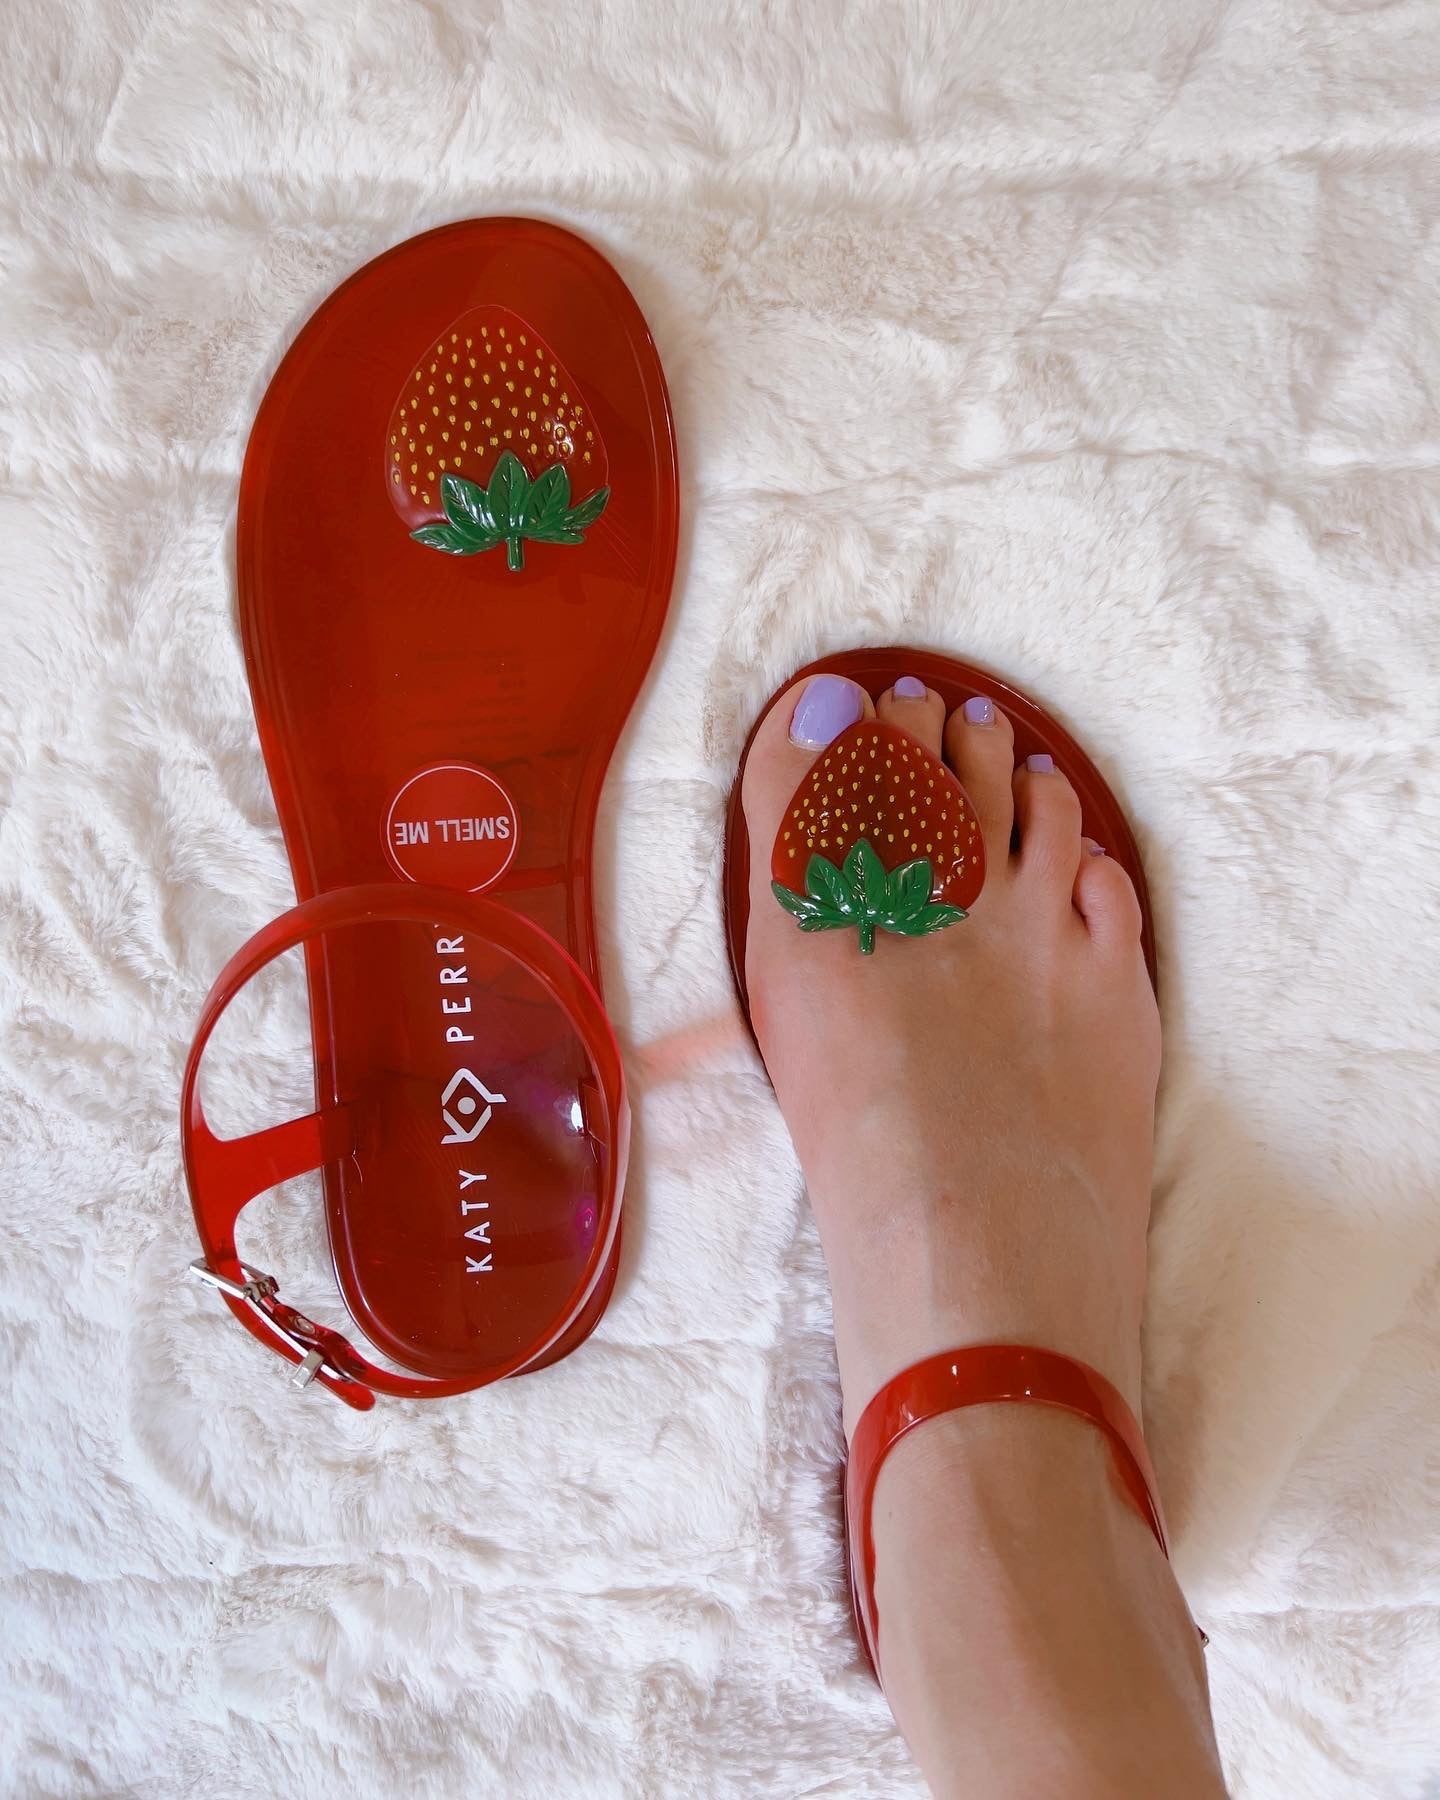 Katy Perry Geli Sandals, Strawberry, Size 8